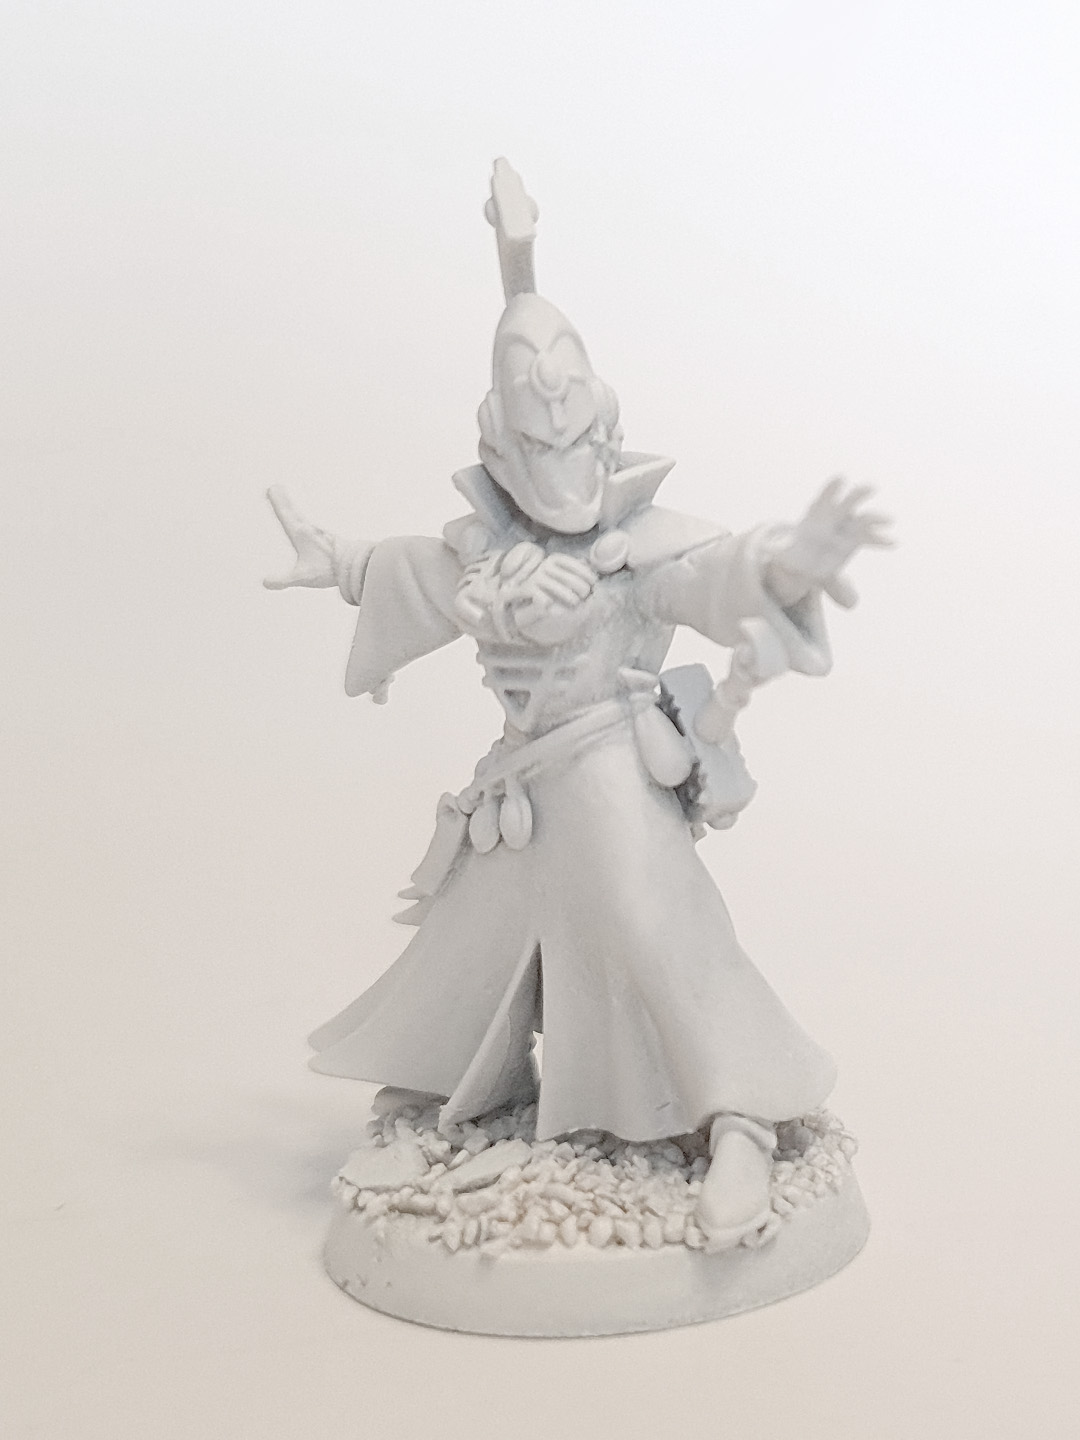 Eldar Warlock with witchblade conversion